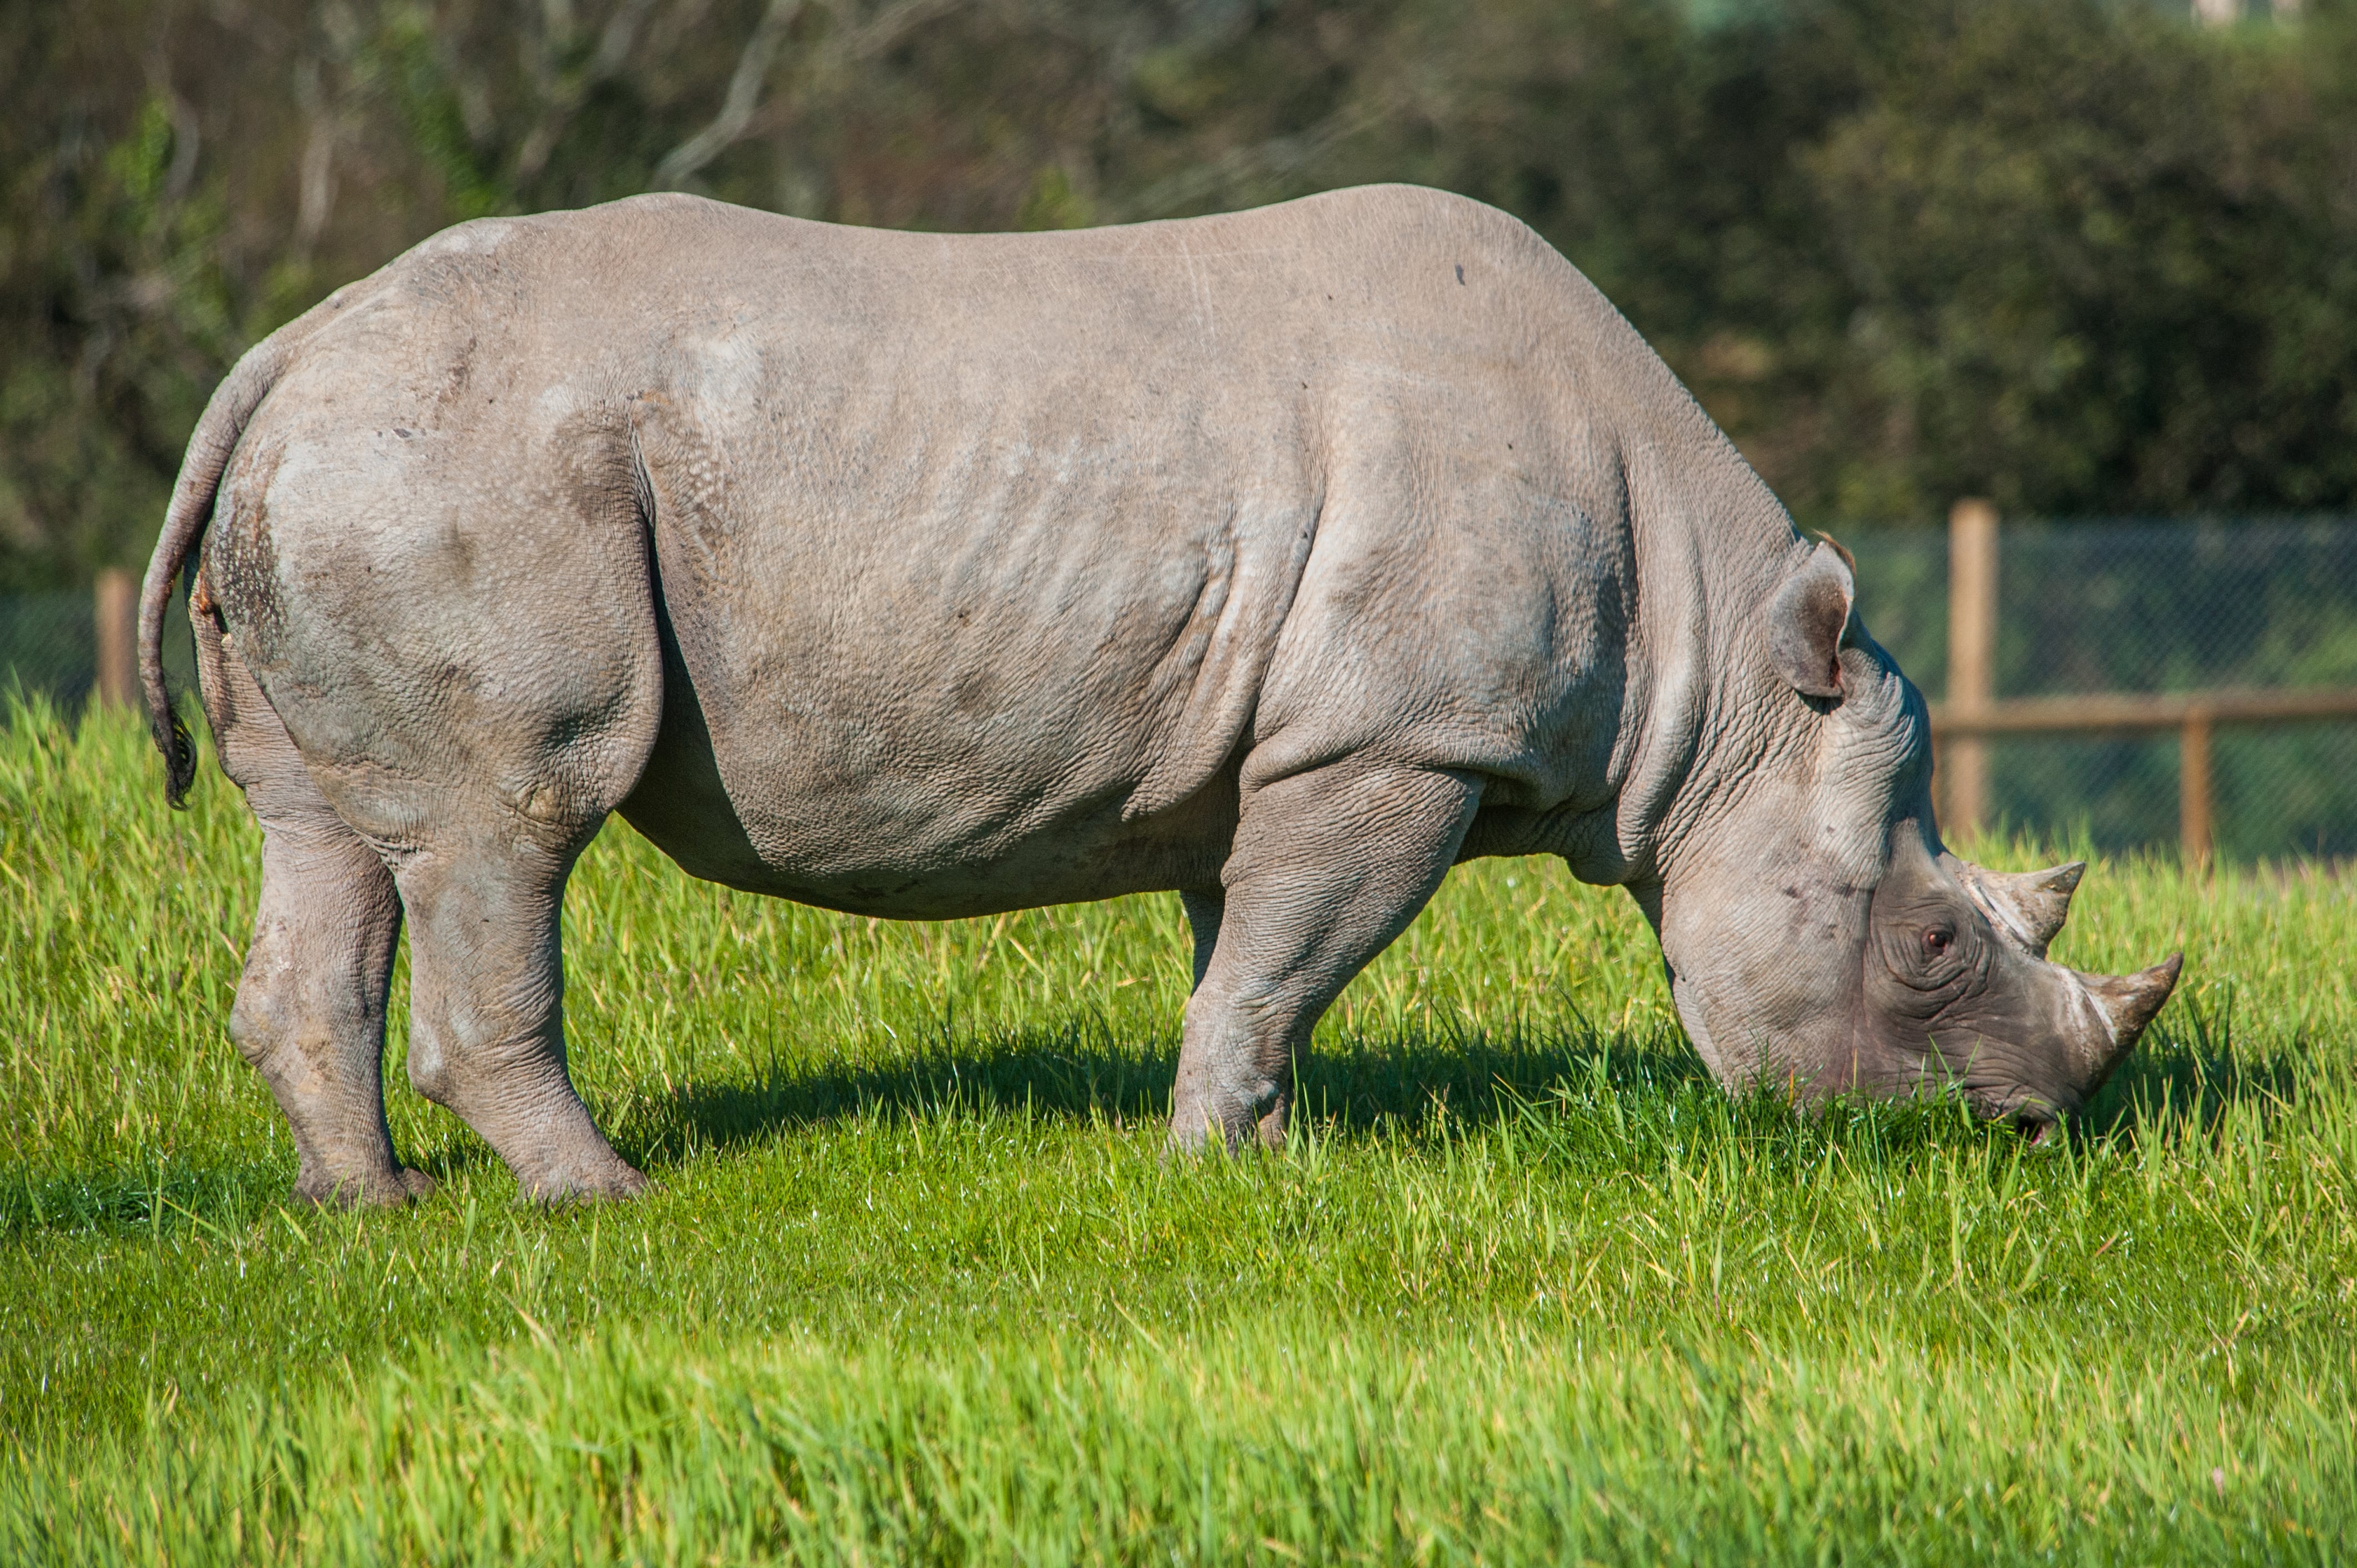 Rhino grazing on grass